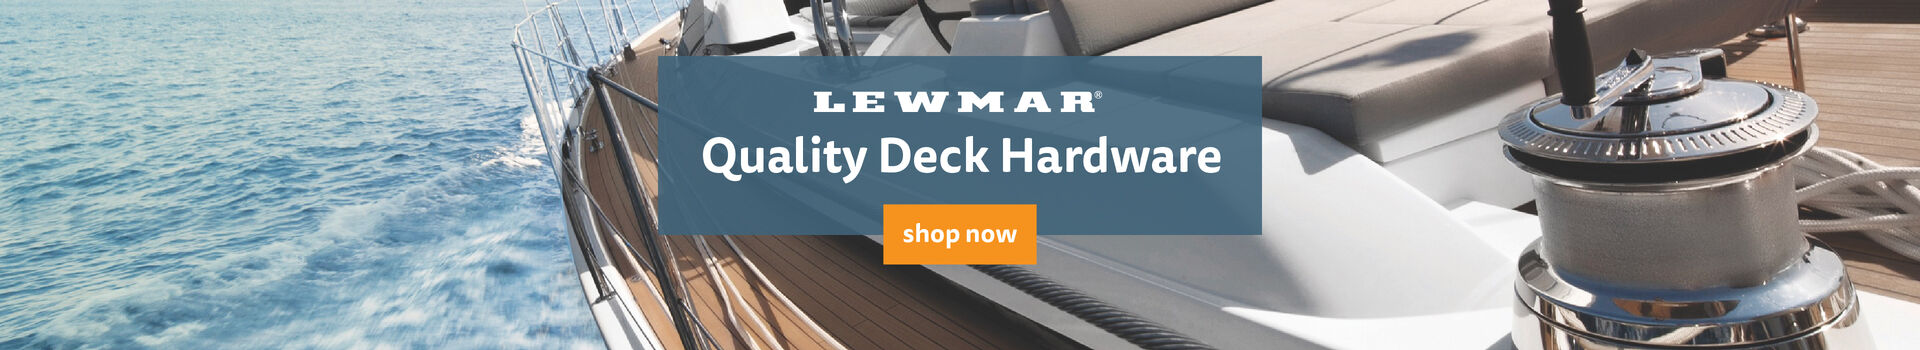 Lewmar - Quality Deck Hardware